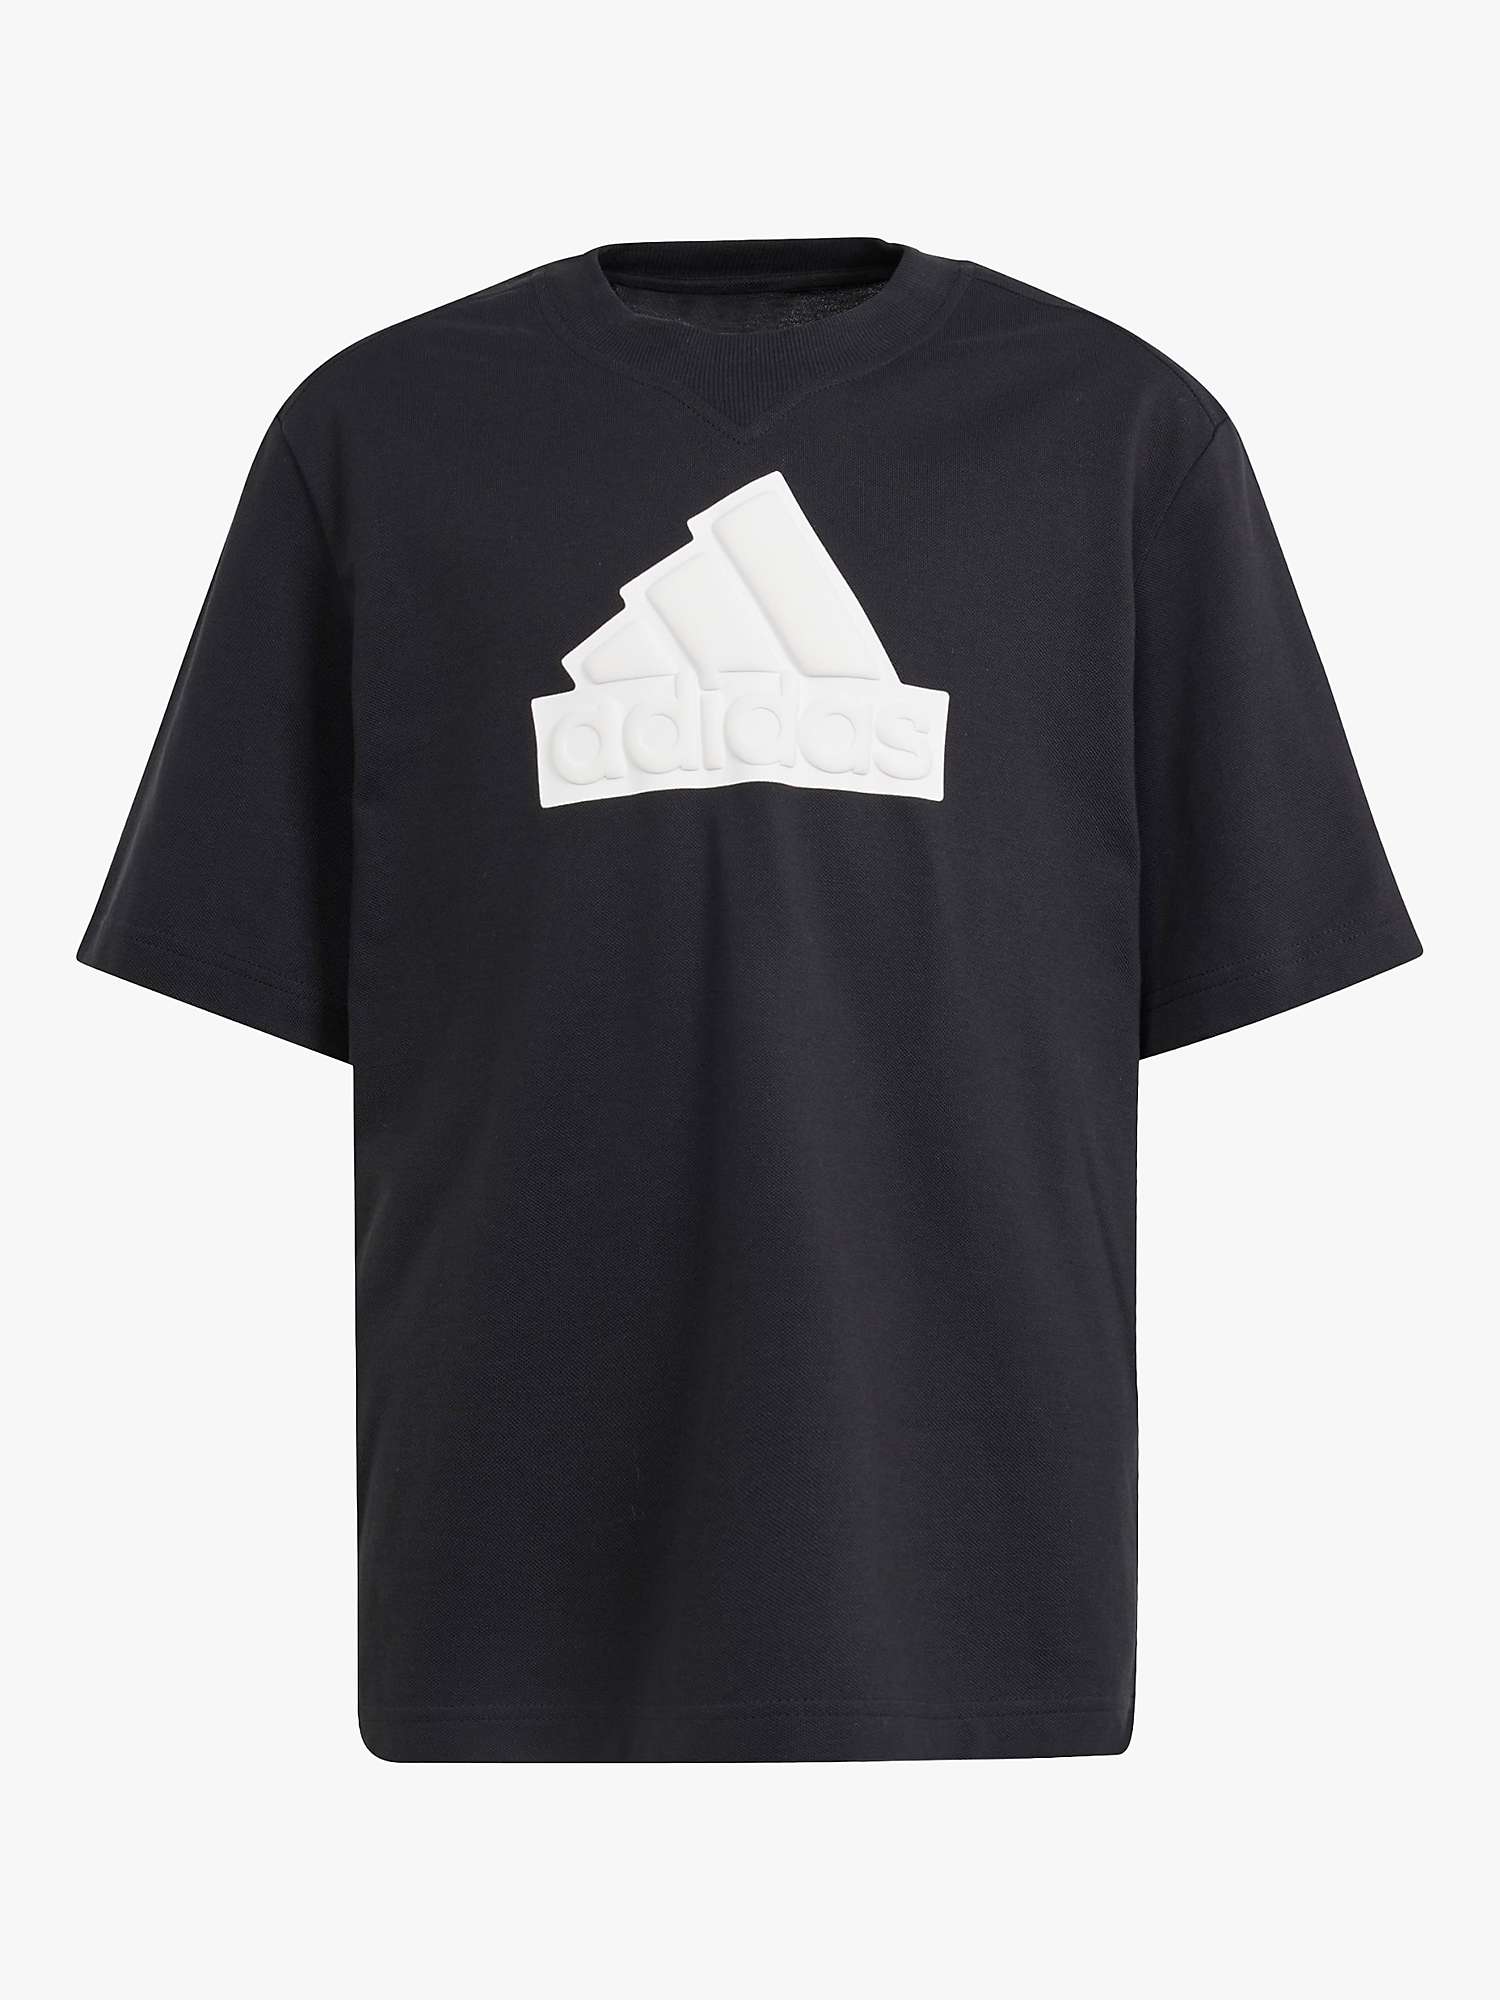 Buy adidas Kids' Future Icons Logo Pique T-Shirt, Black Online at johnlewis.com